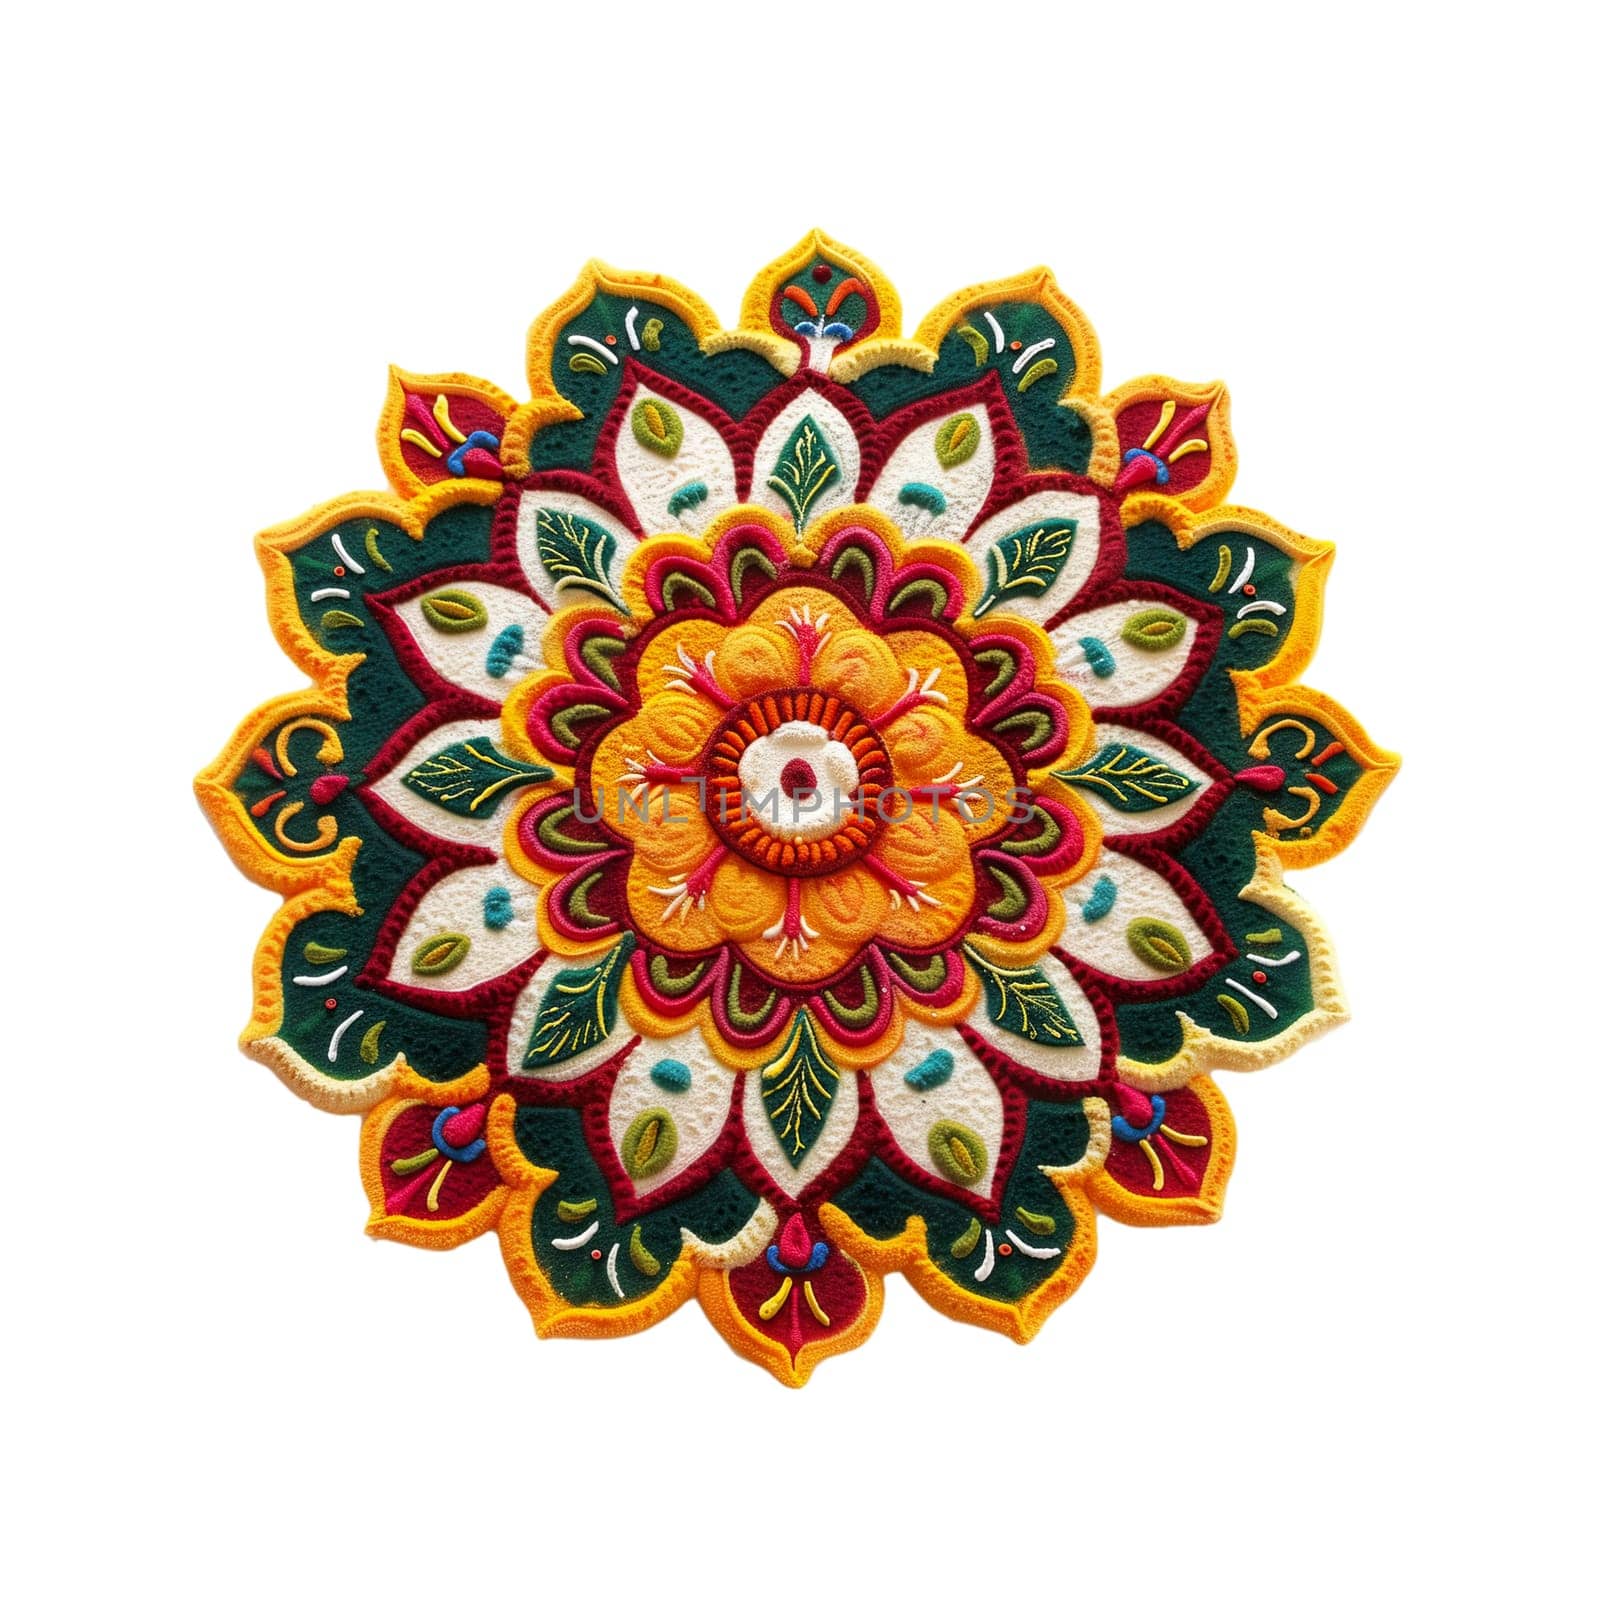 Diwali Rangoli flower petals ornament by Dustick